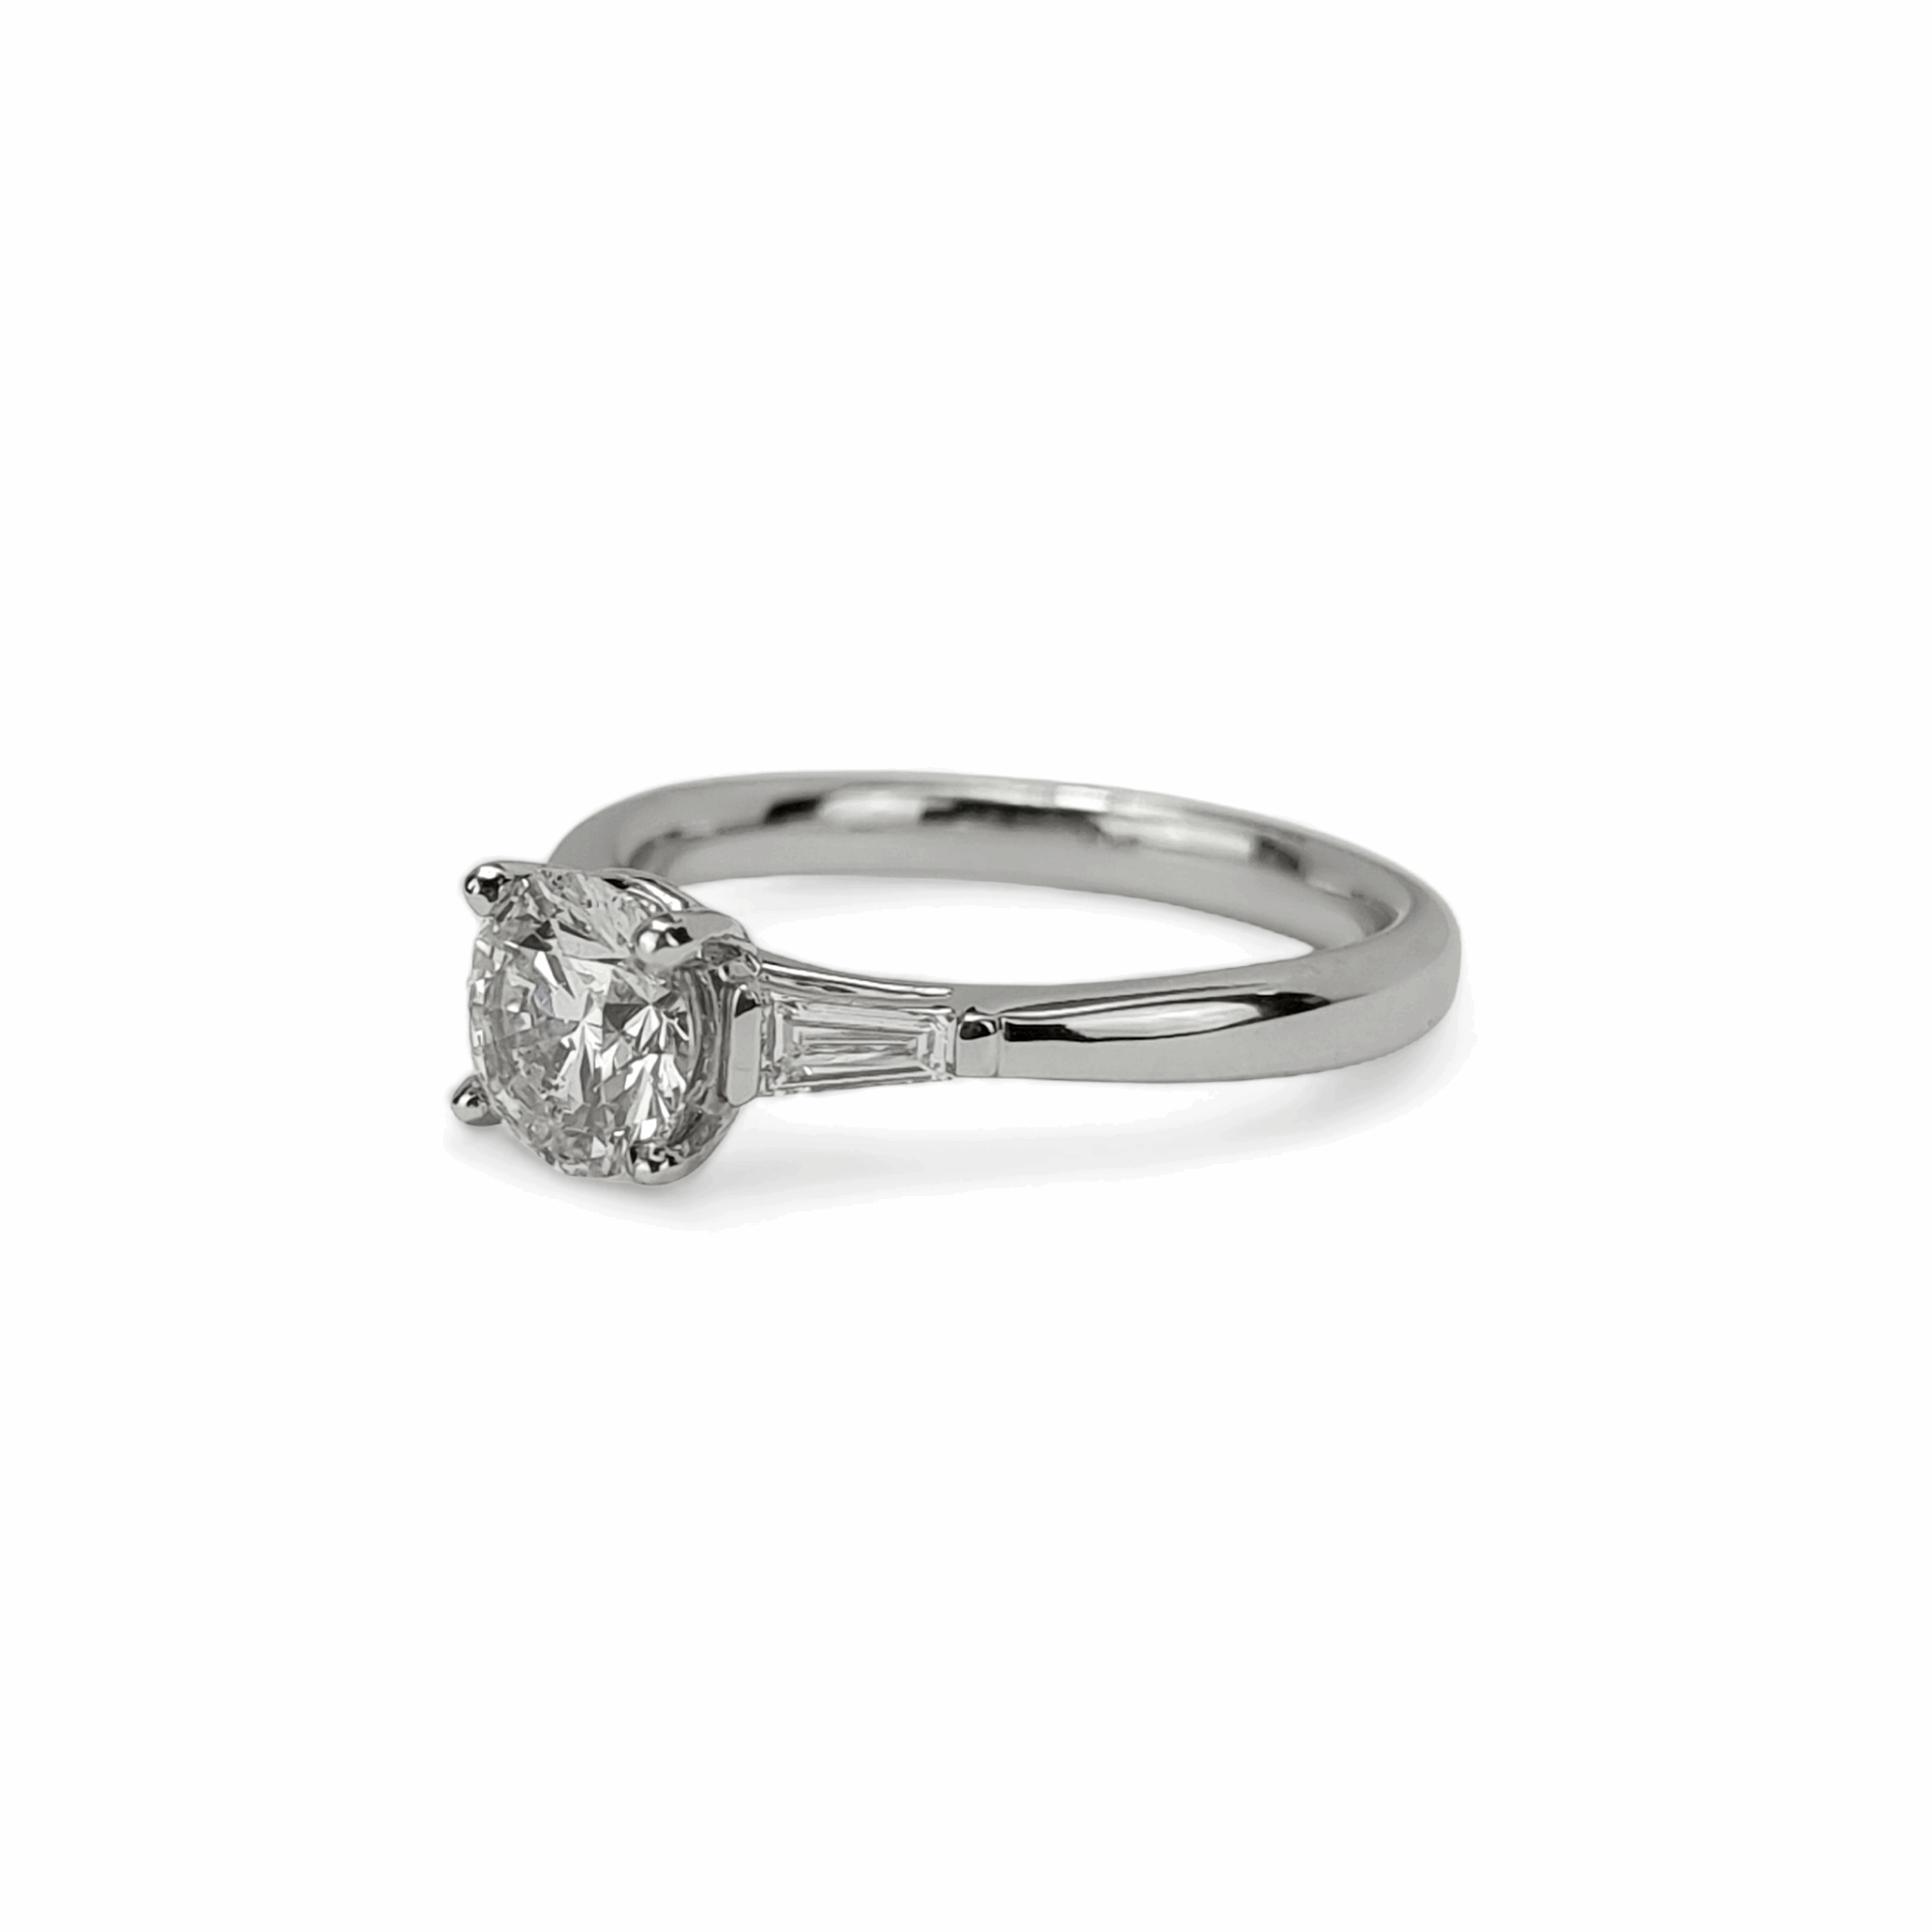 1.00ct Vintage Style Diamond Ring